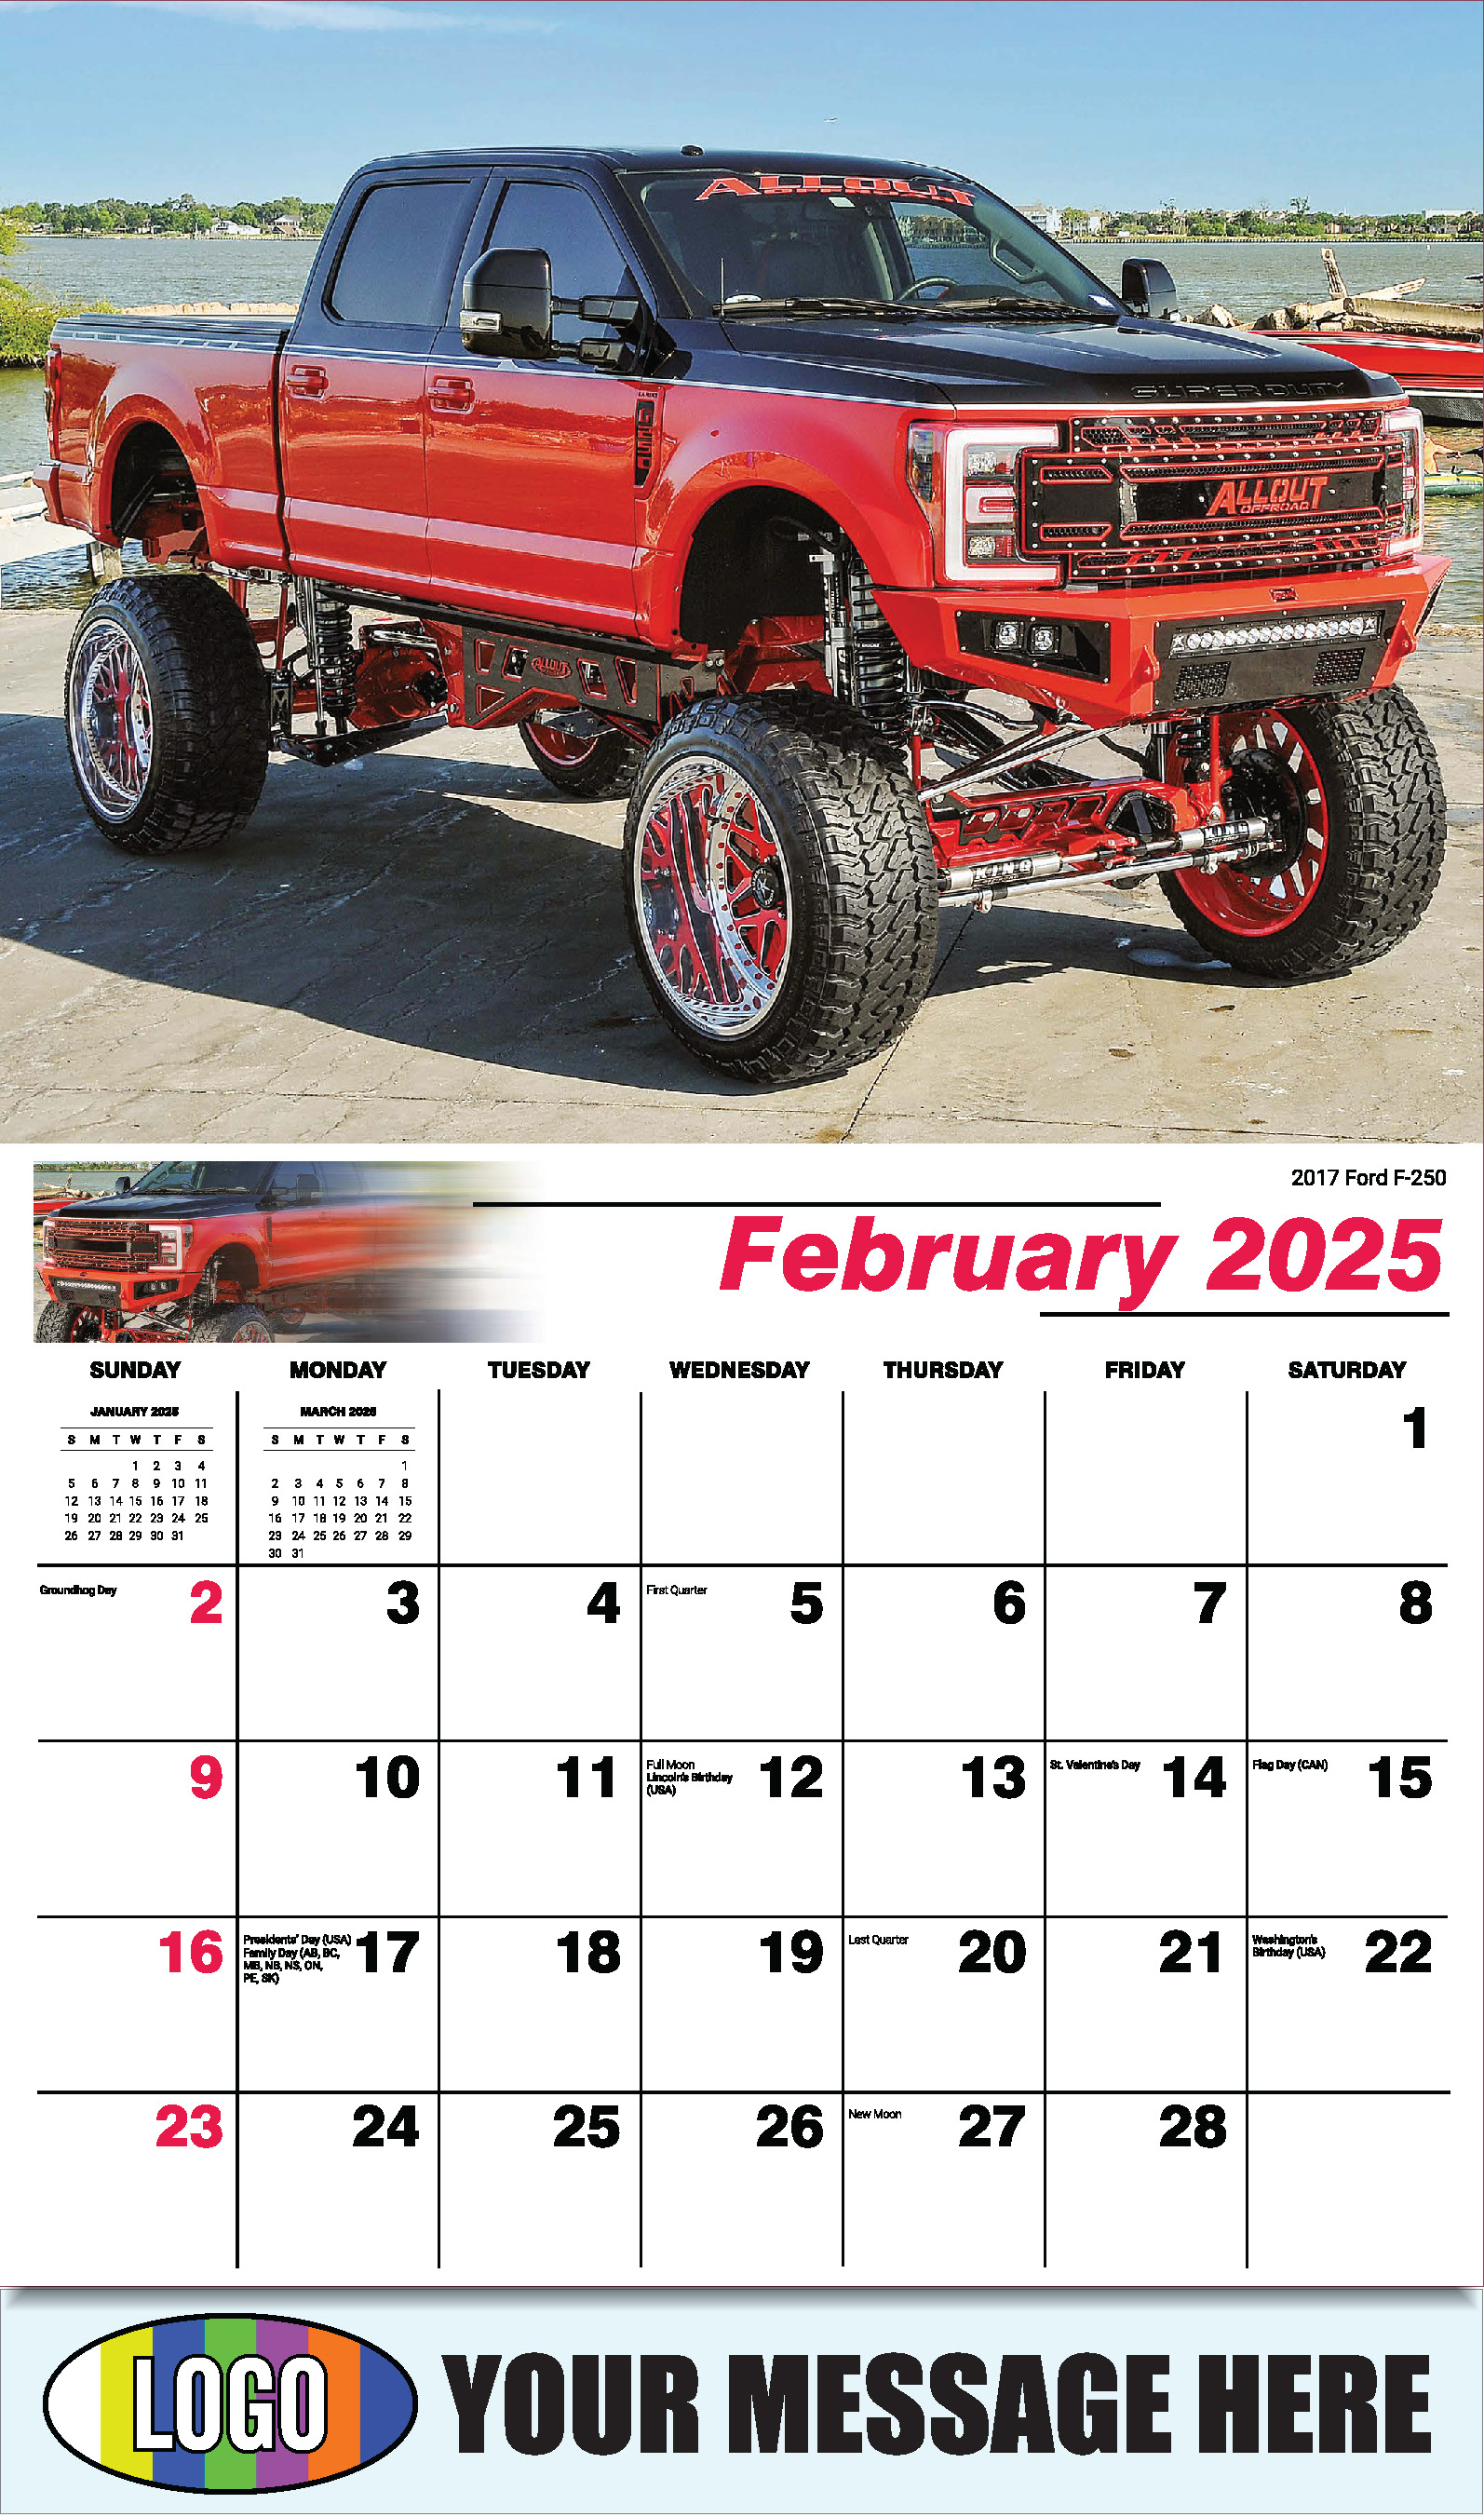 Pumped-Up Pickups 2025 Automotive Business Promo Calendar - February